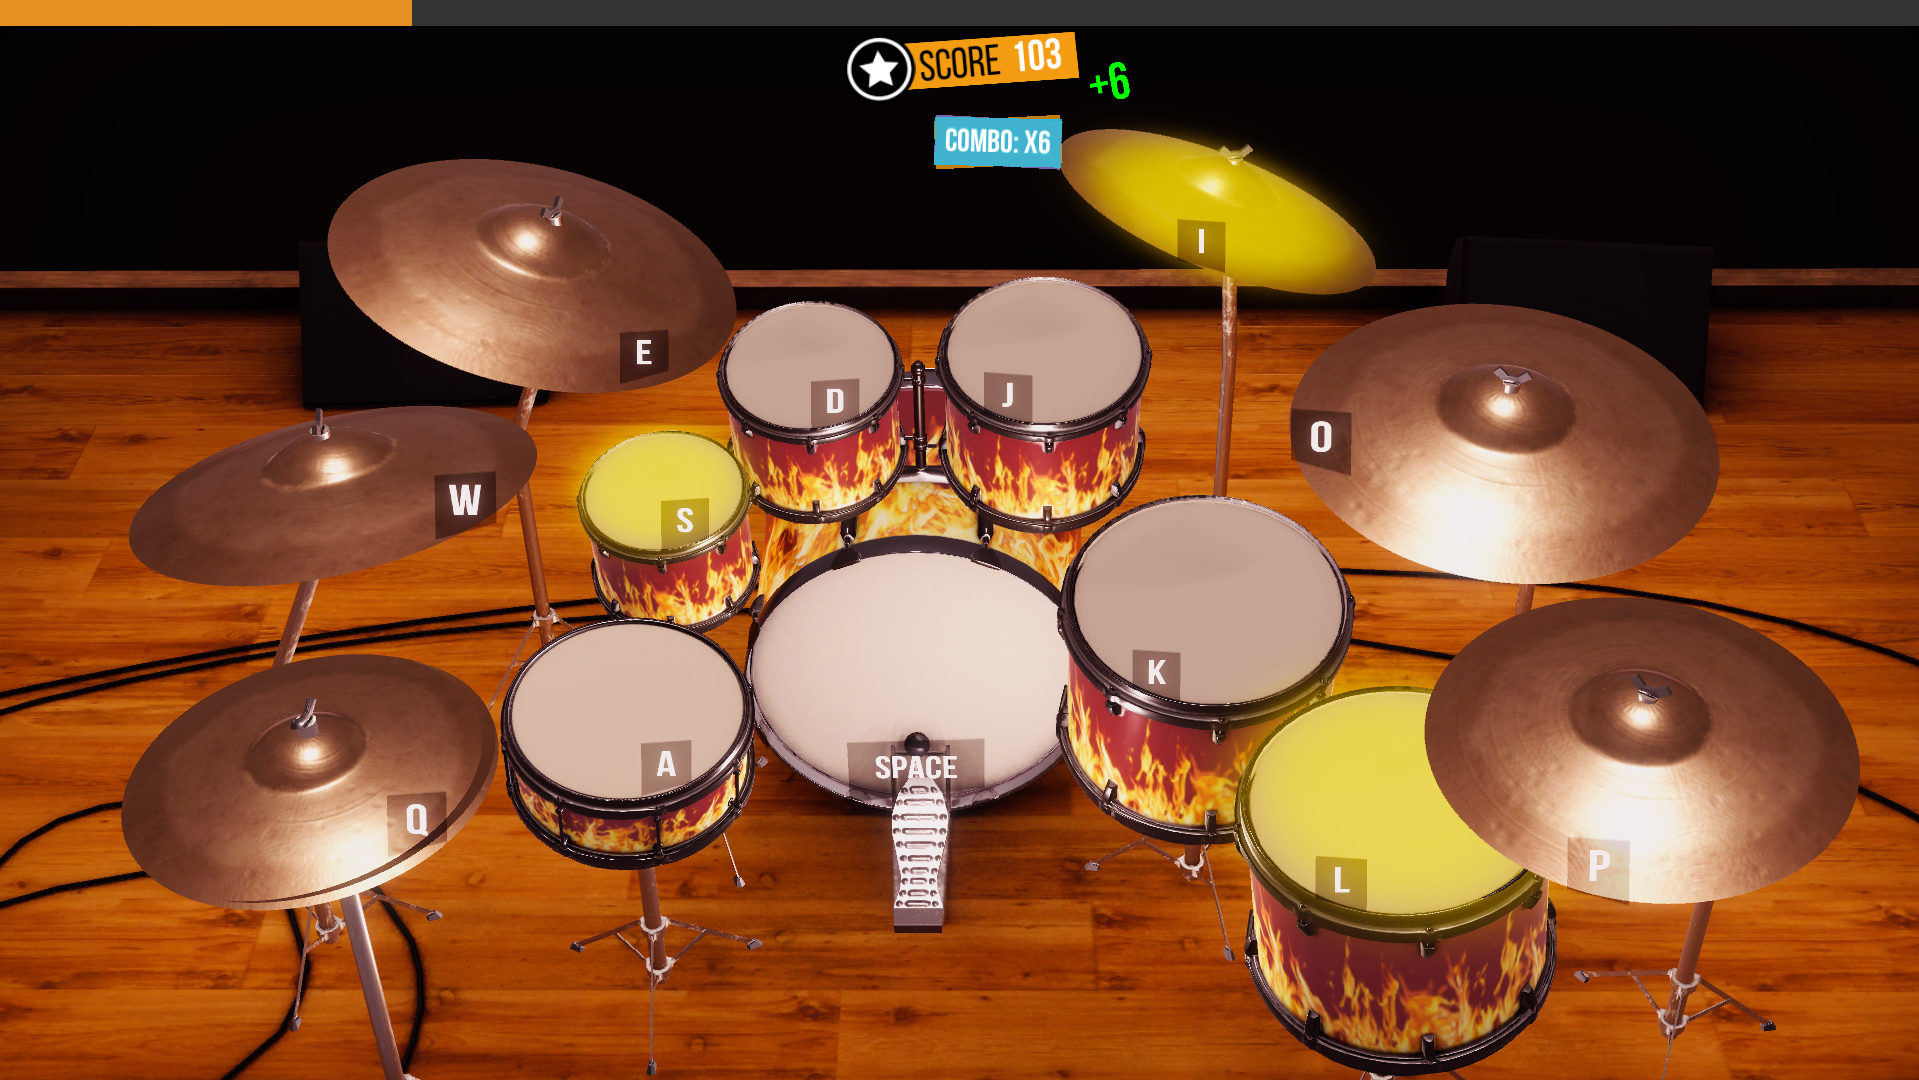 Drum Simulator on Steam